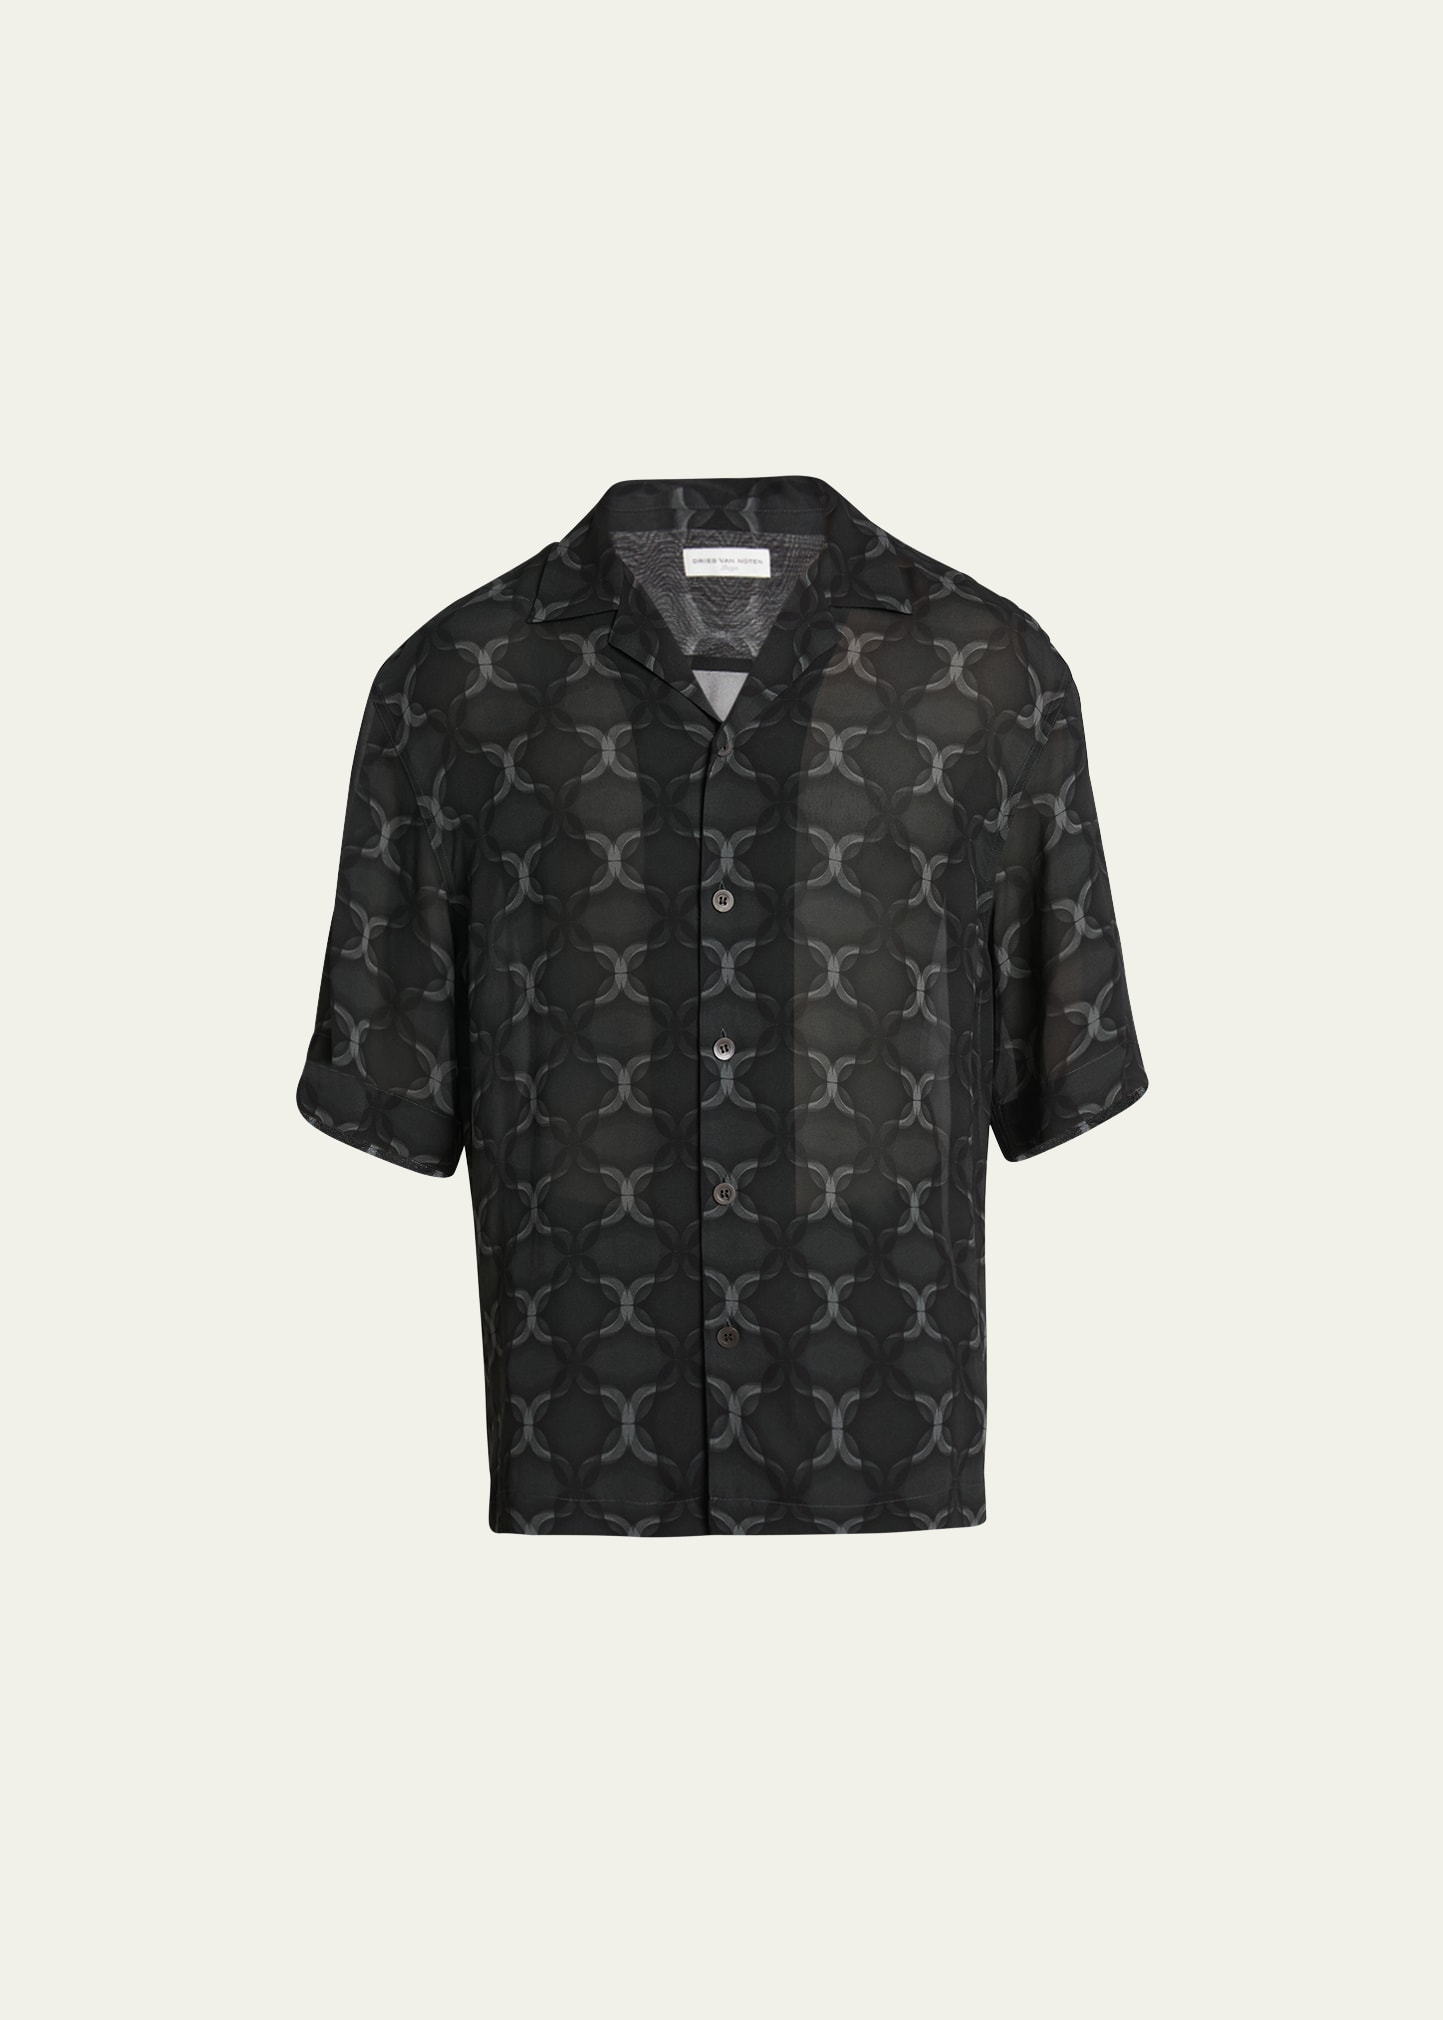 Dries Van Noten Men's Printed Viscose Georgette Camp Shirt In 901 - Anthracite